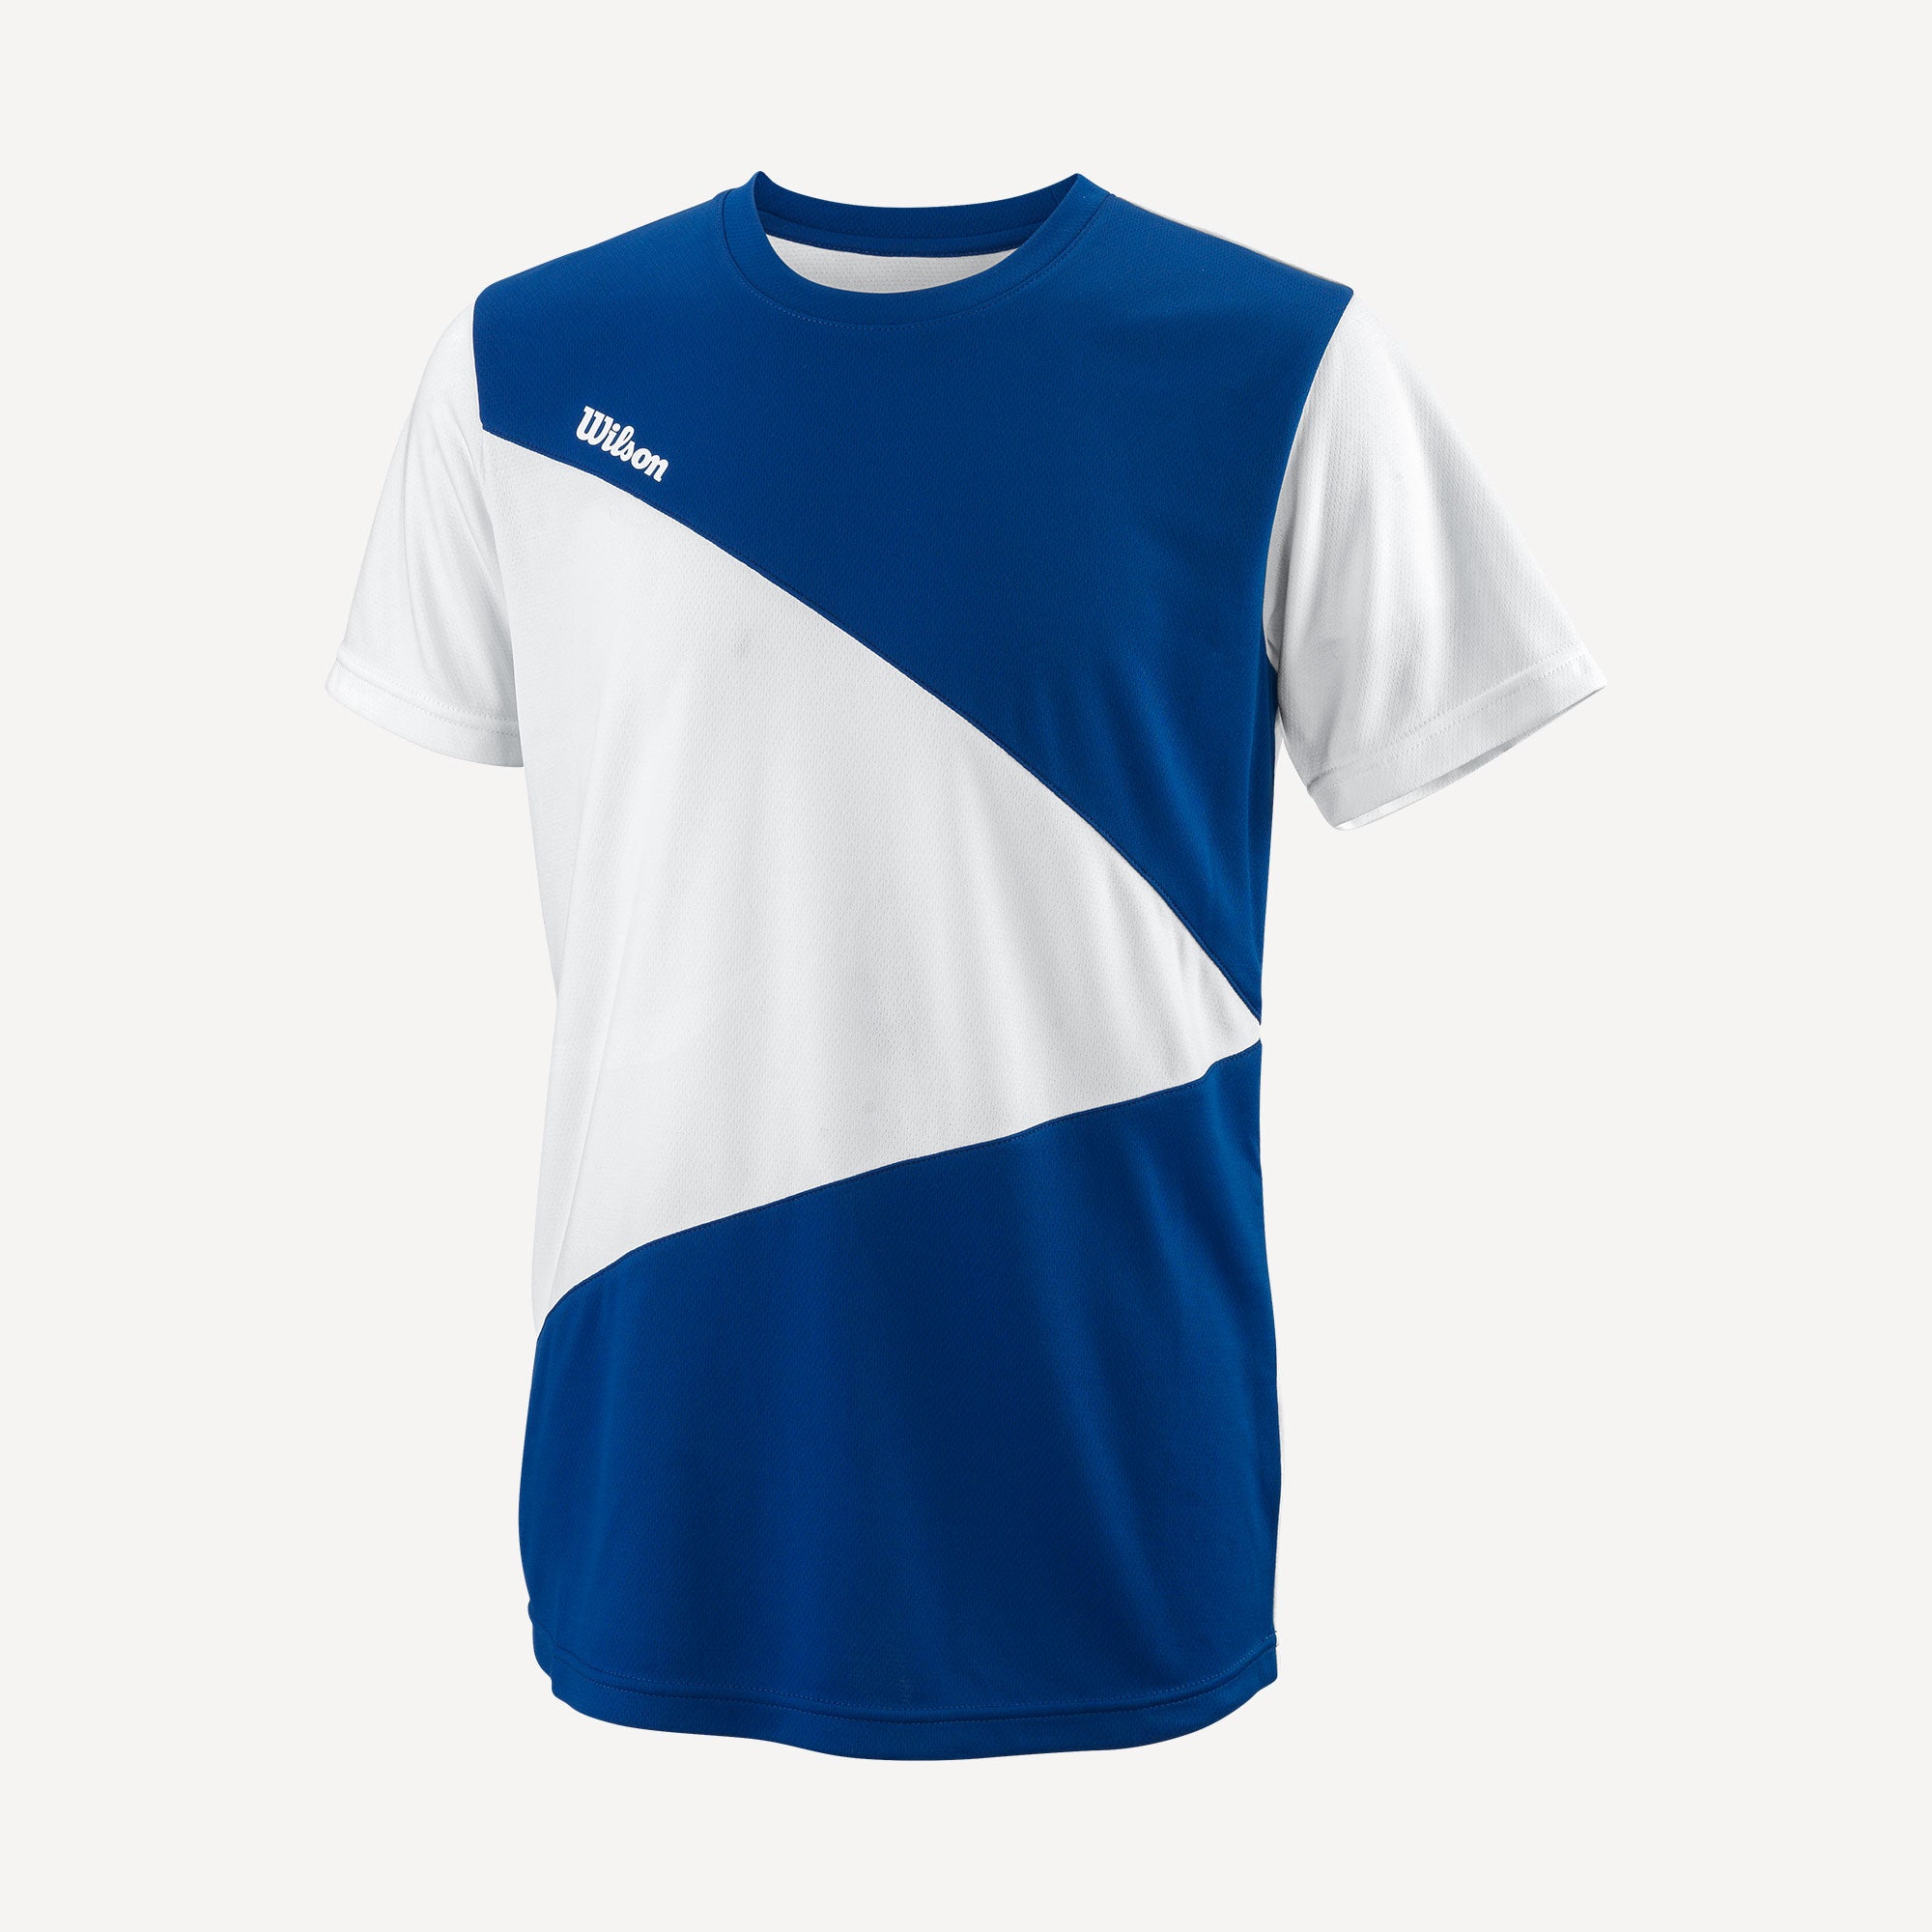 Wilson Team 2 Boys' Triangle Tennis Shirt Blue (1)